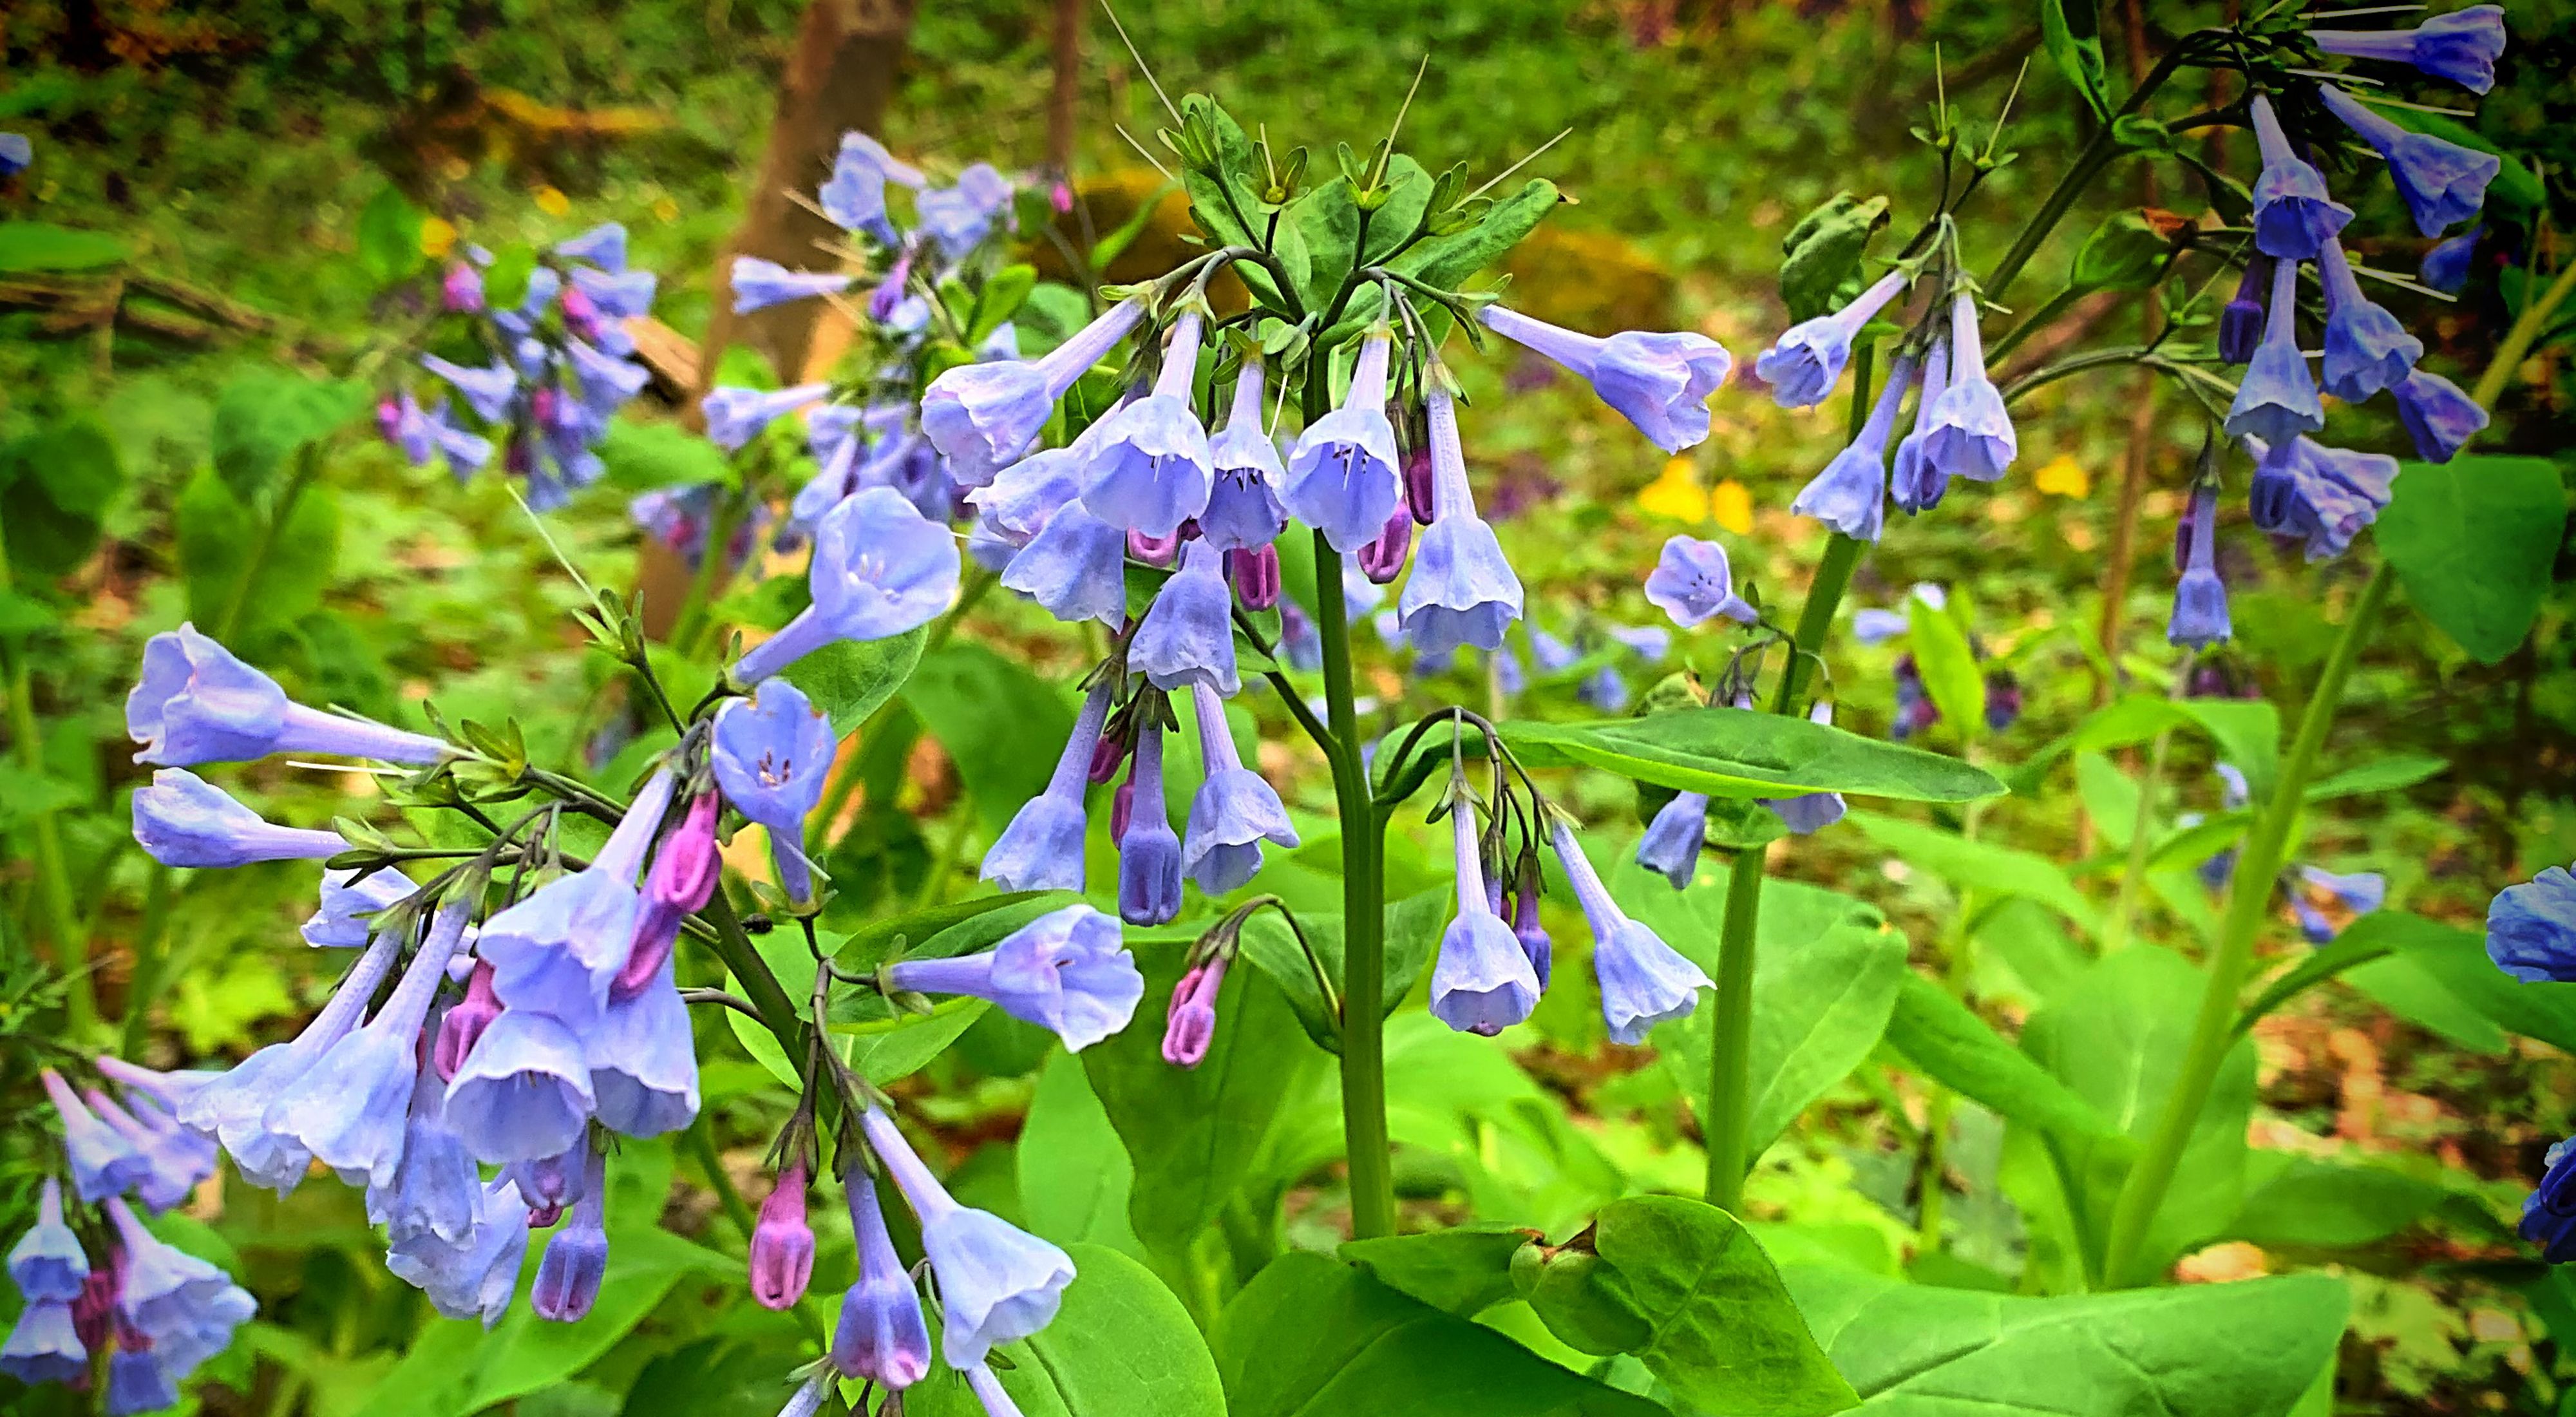 Virginia bluebells, light purple flowers shaped like bells, emerge from green foliage.